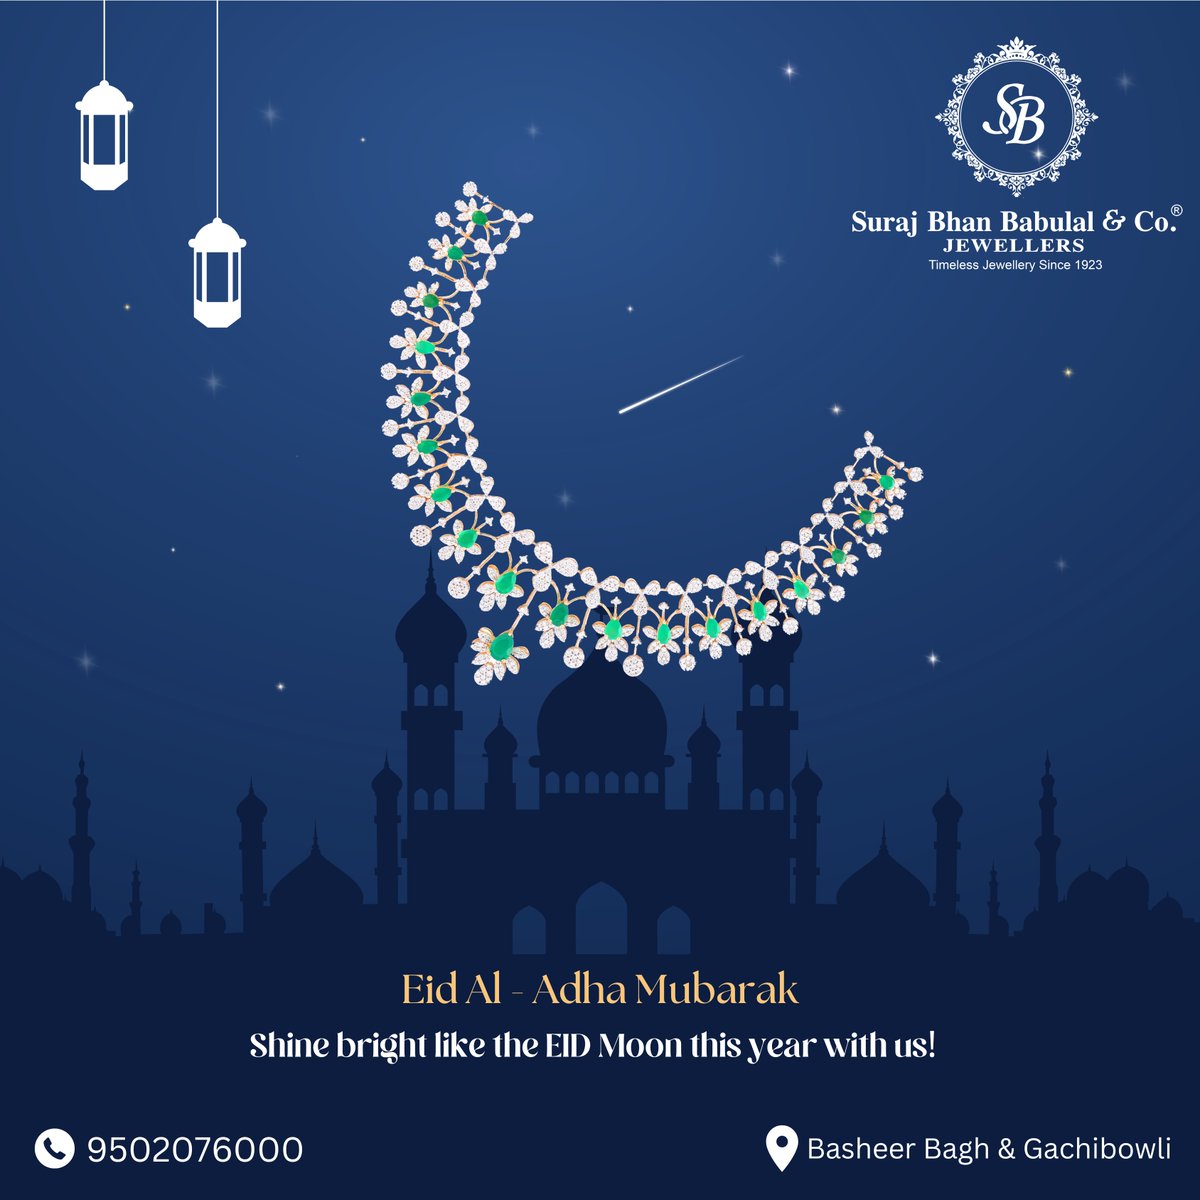 Wishing you a joyous and blessed Bakrid filled with love, peace, and happiness. Eid  Mubarak! 🌙
.
.
.
#BakridWishes #EidBlessings #EidMubarak #BakridFestivities #EidCelebration #BakridBlessings #EidAlAdha #EidWishes #EidMubarak #BakridCelebrations #EidGreetings #Bakrid2023